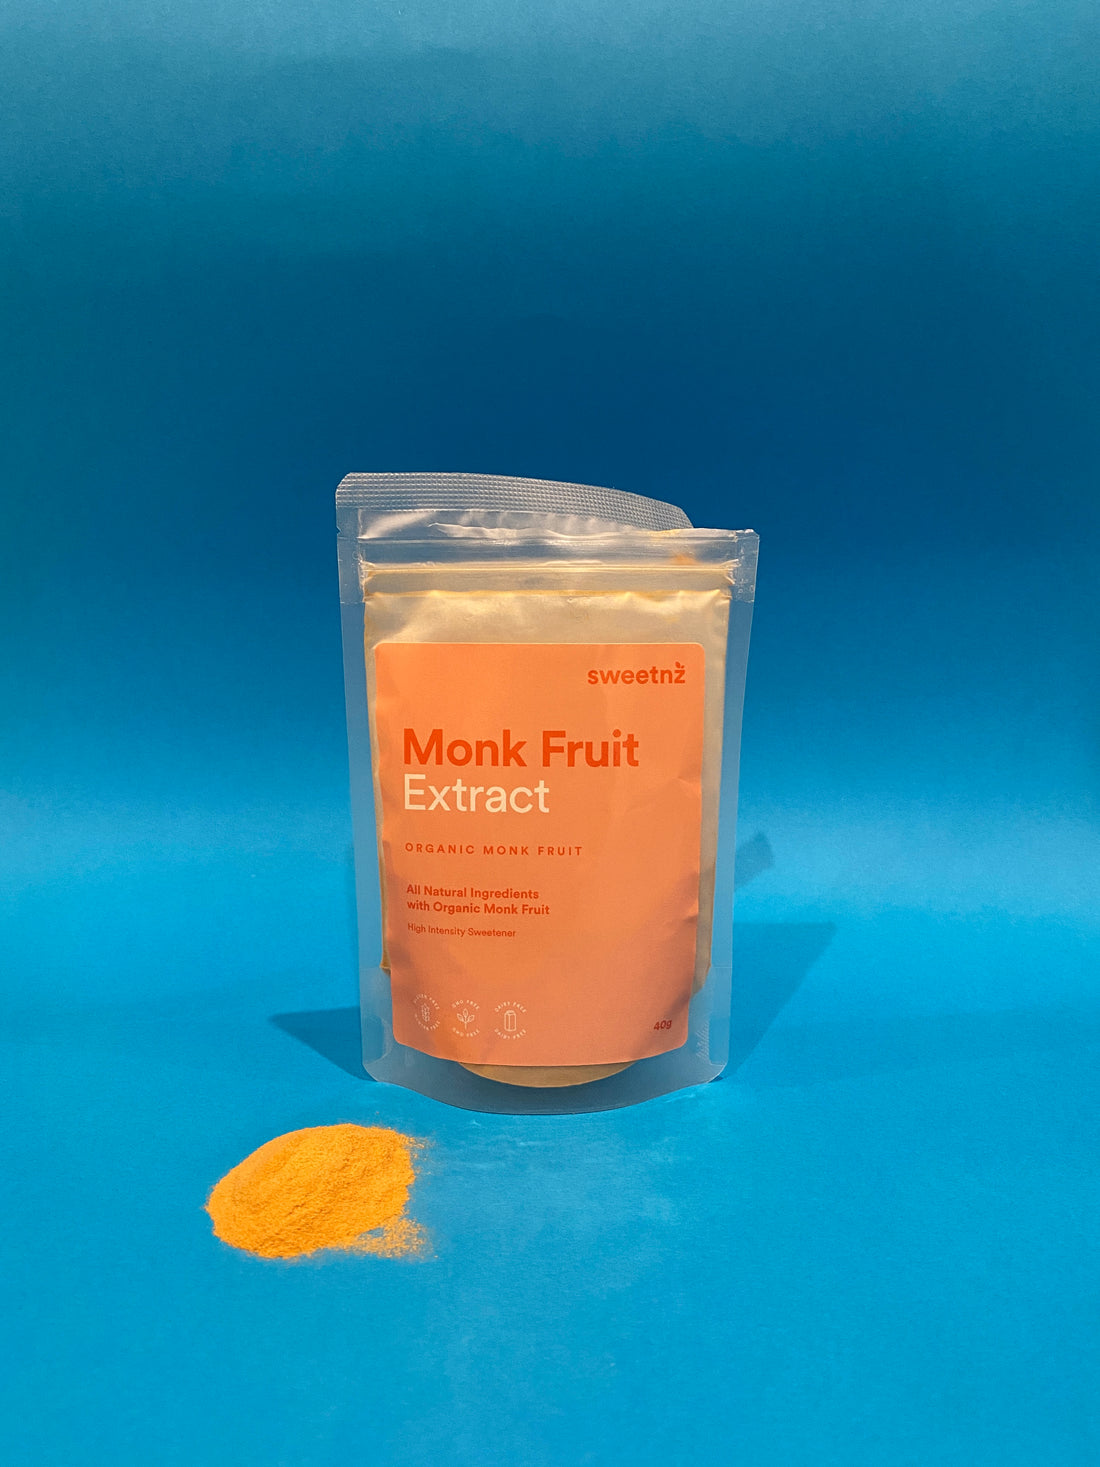 Monk Fruit 40g opened with powder.